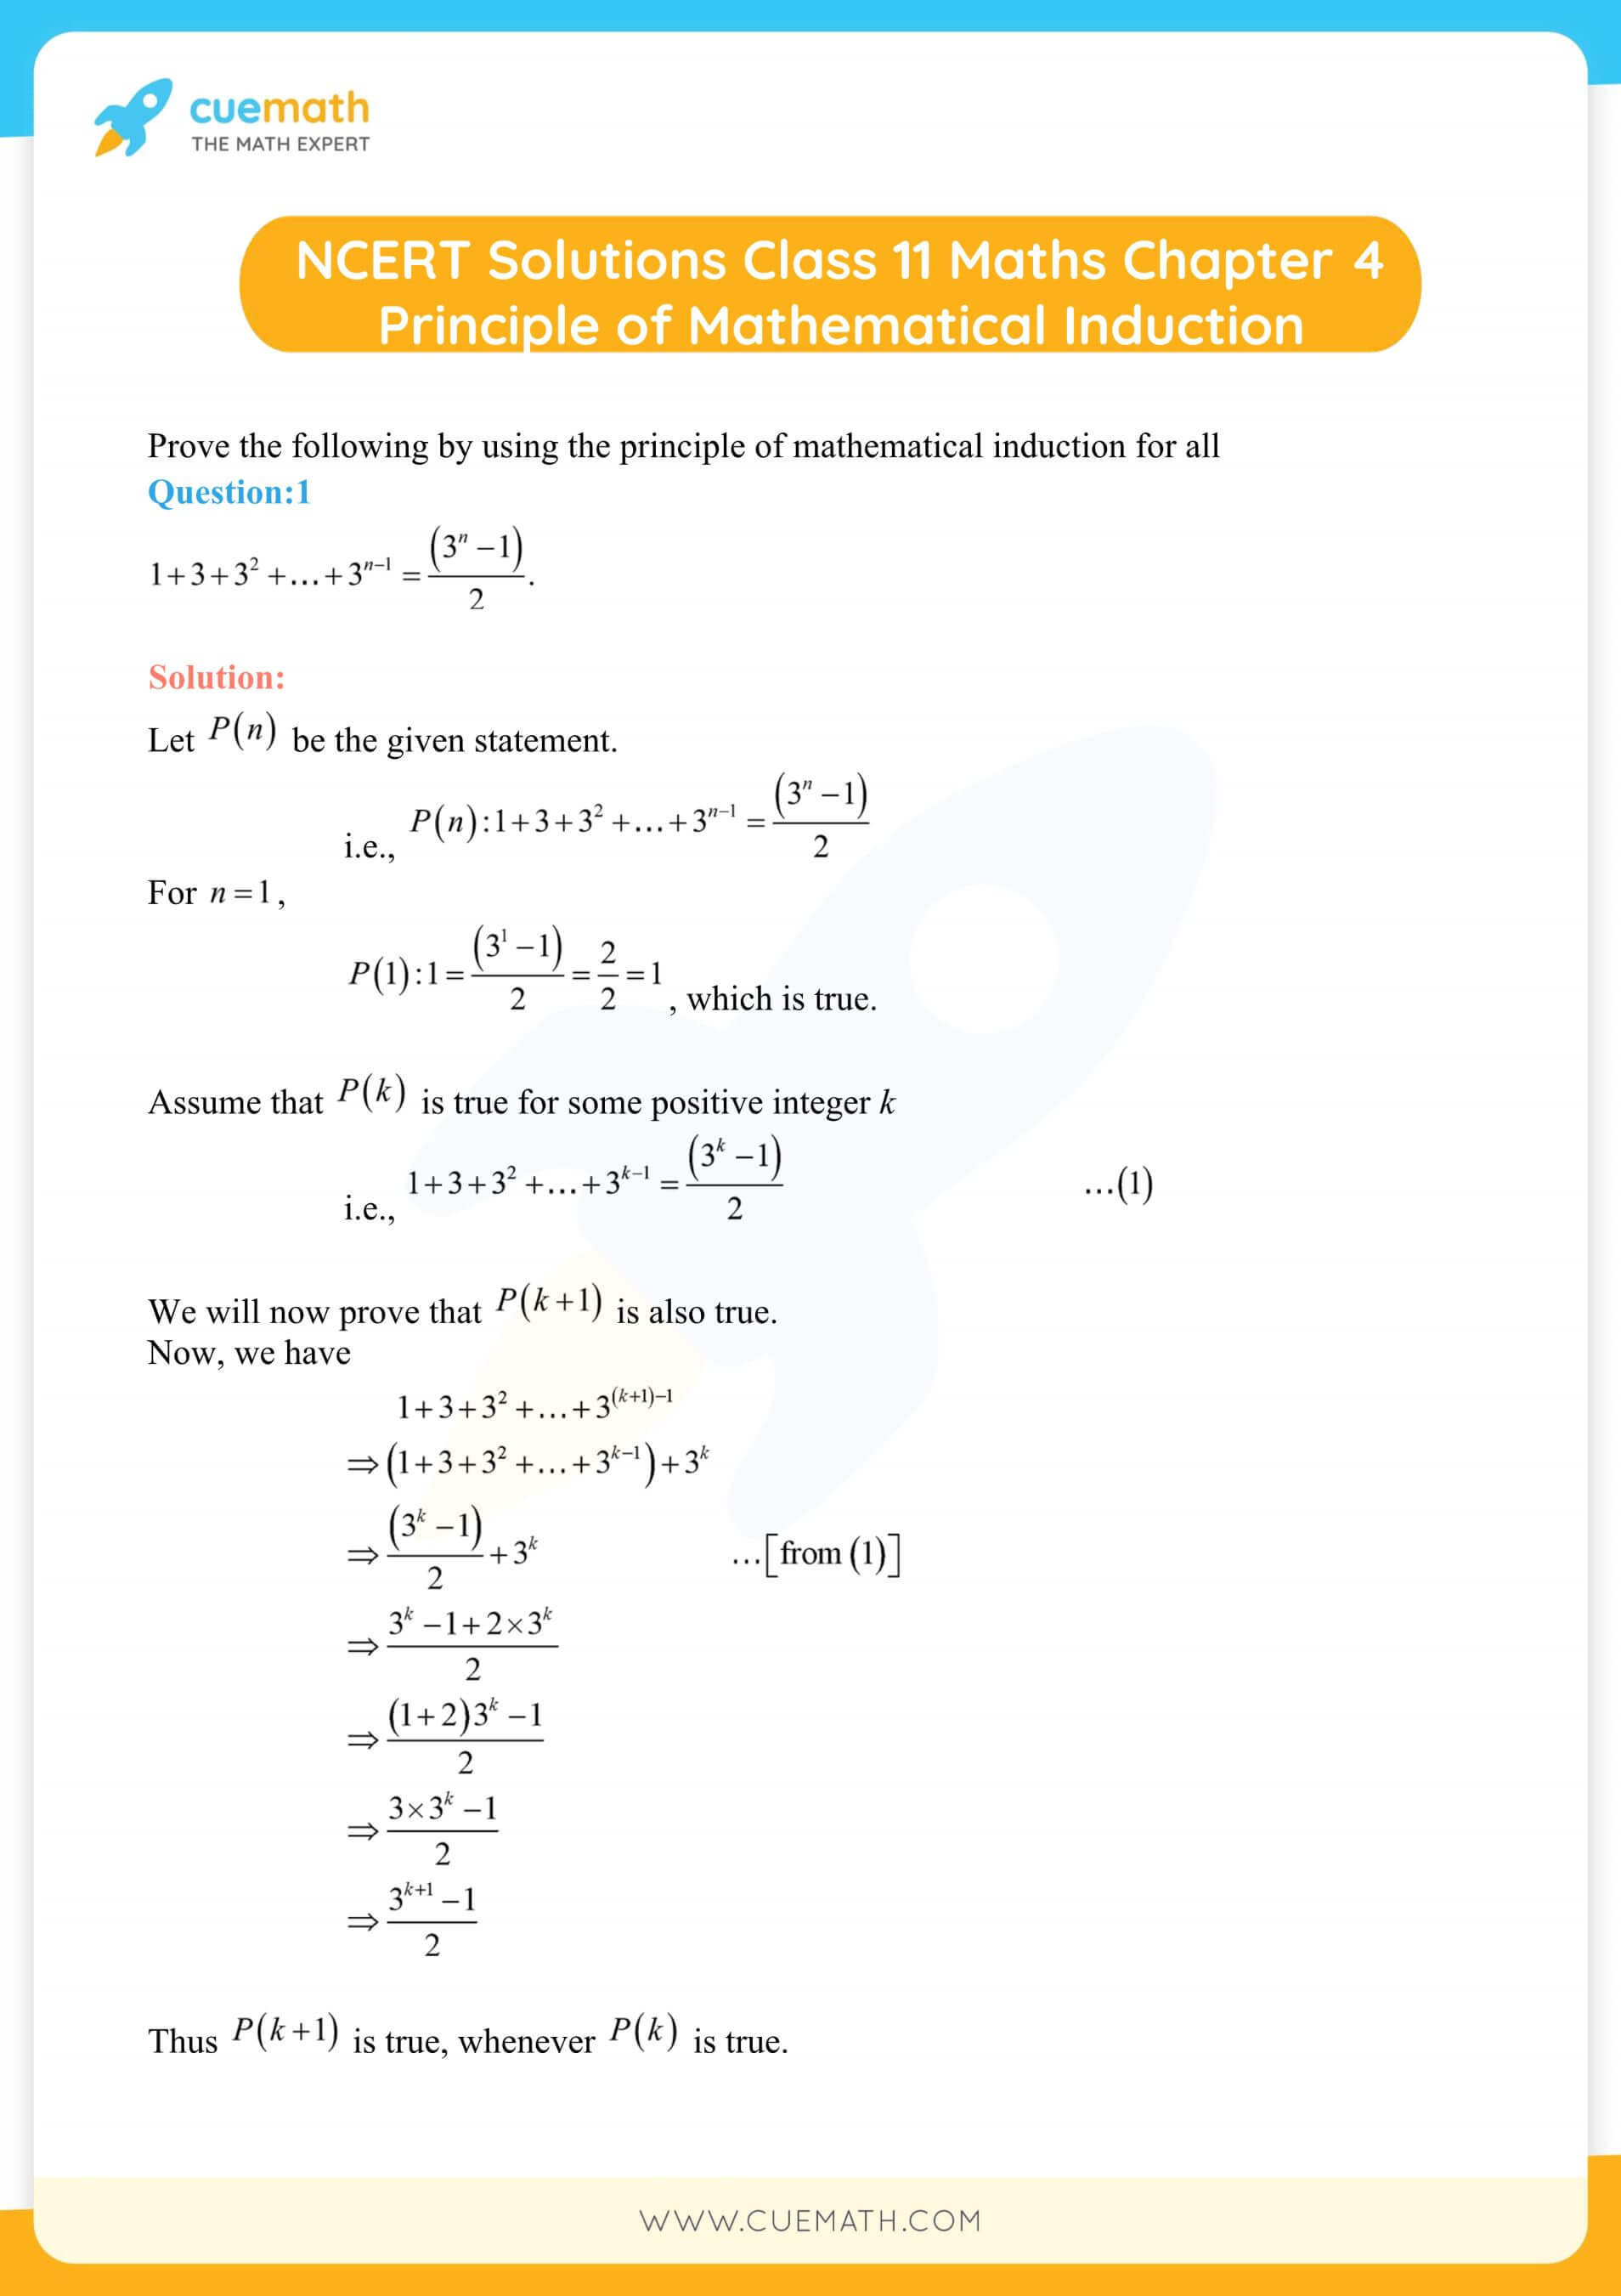 NCERT Solutions Class 11 Maths Chapter 4 Exercise 4.1 1